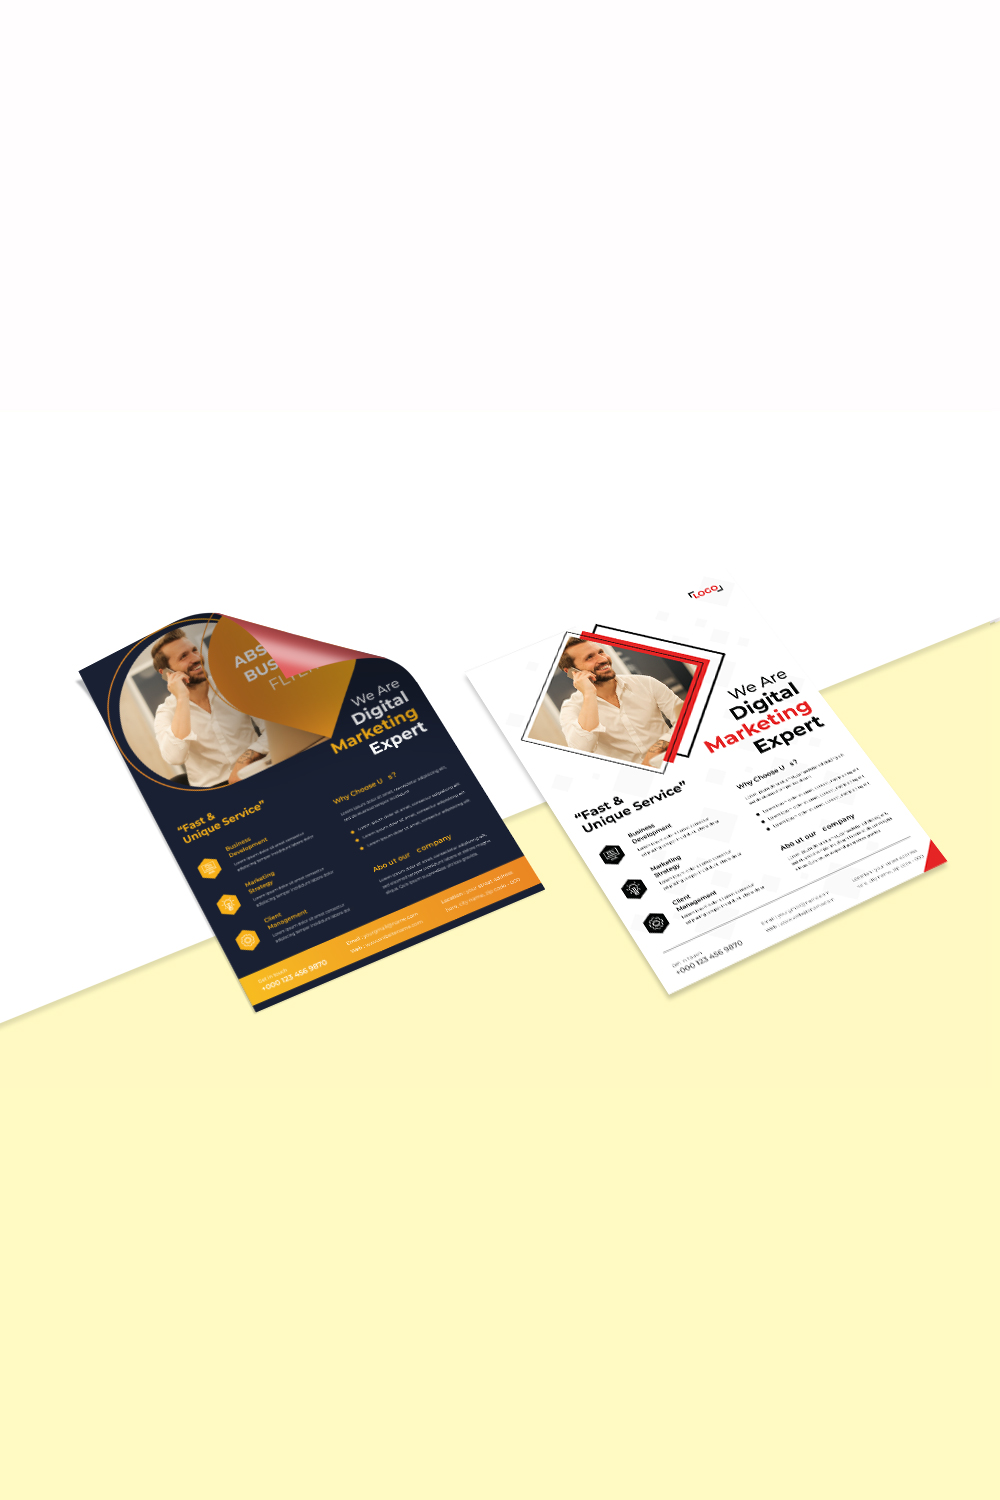 2 Bundles Digital marketing agency modern business flyer design vector template pinterest preview image.